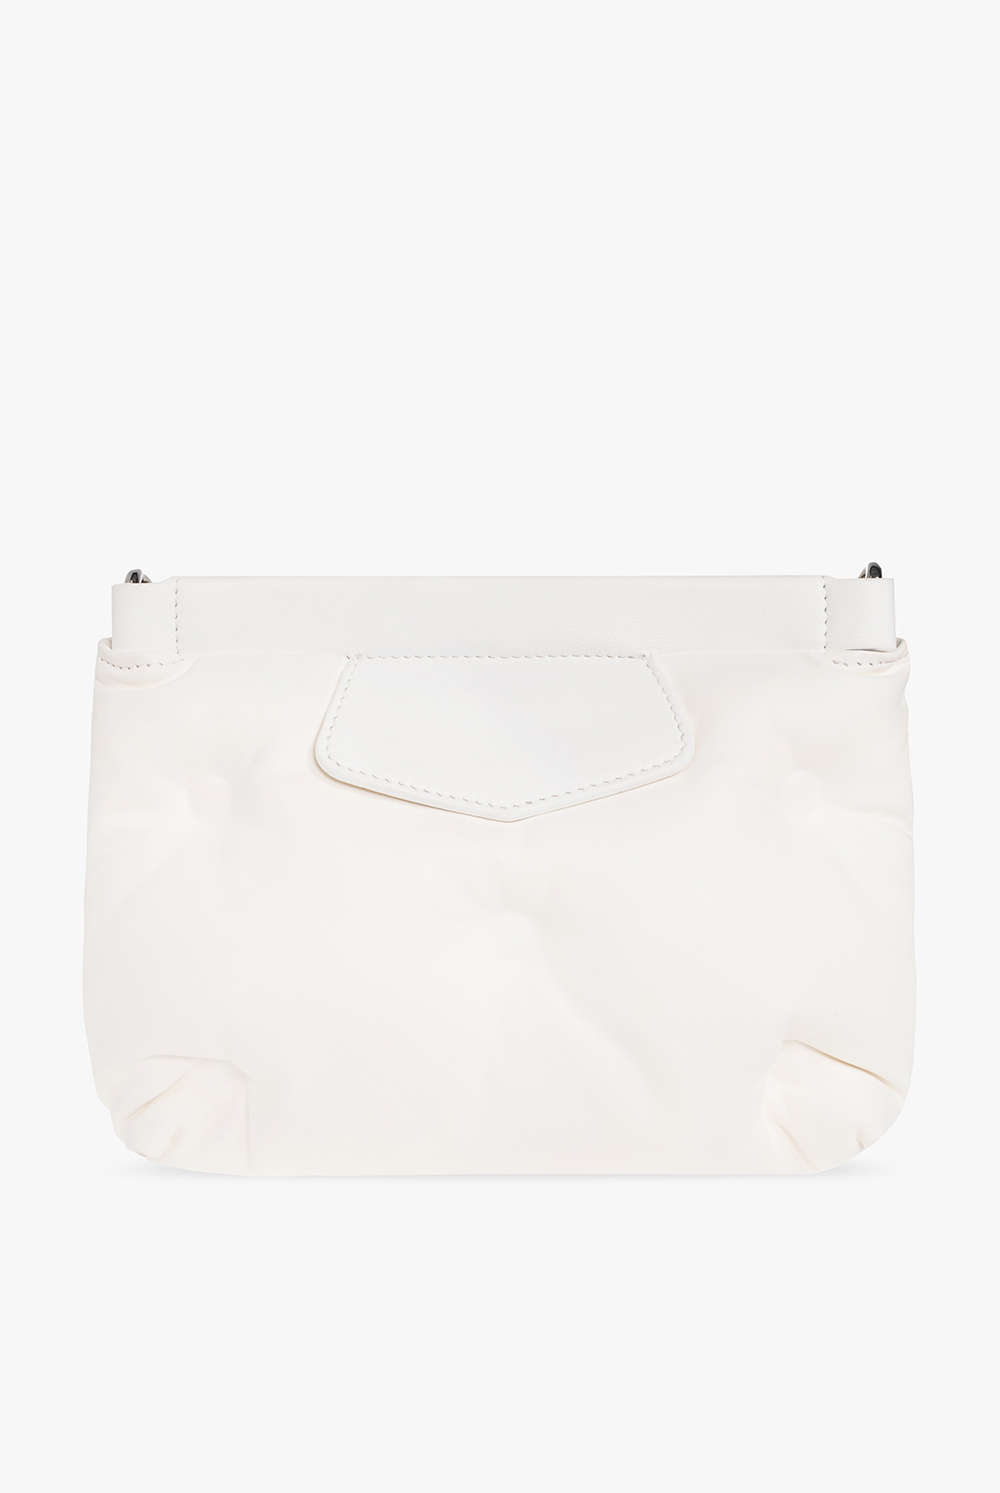 Maison Margiela ‘Glam Slam’ shoulder marcie bag